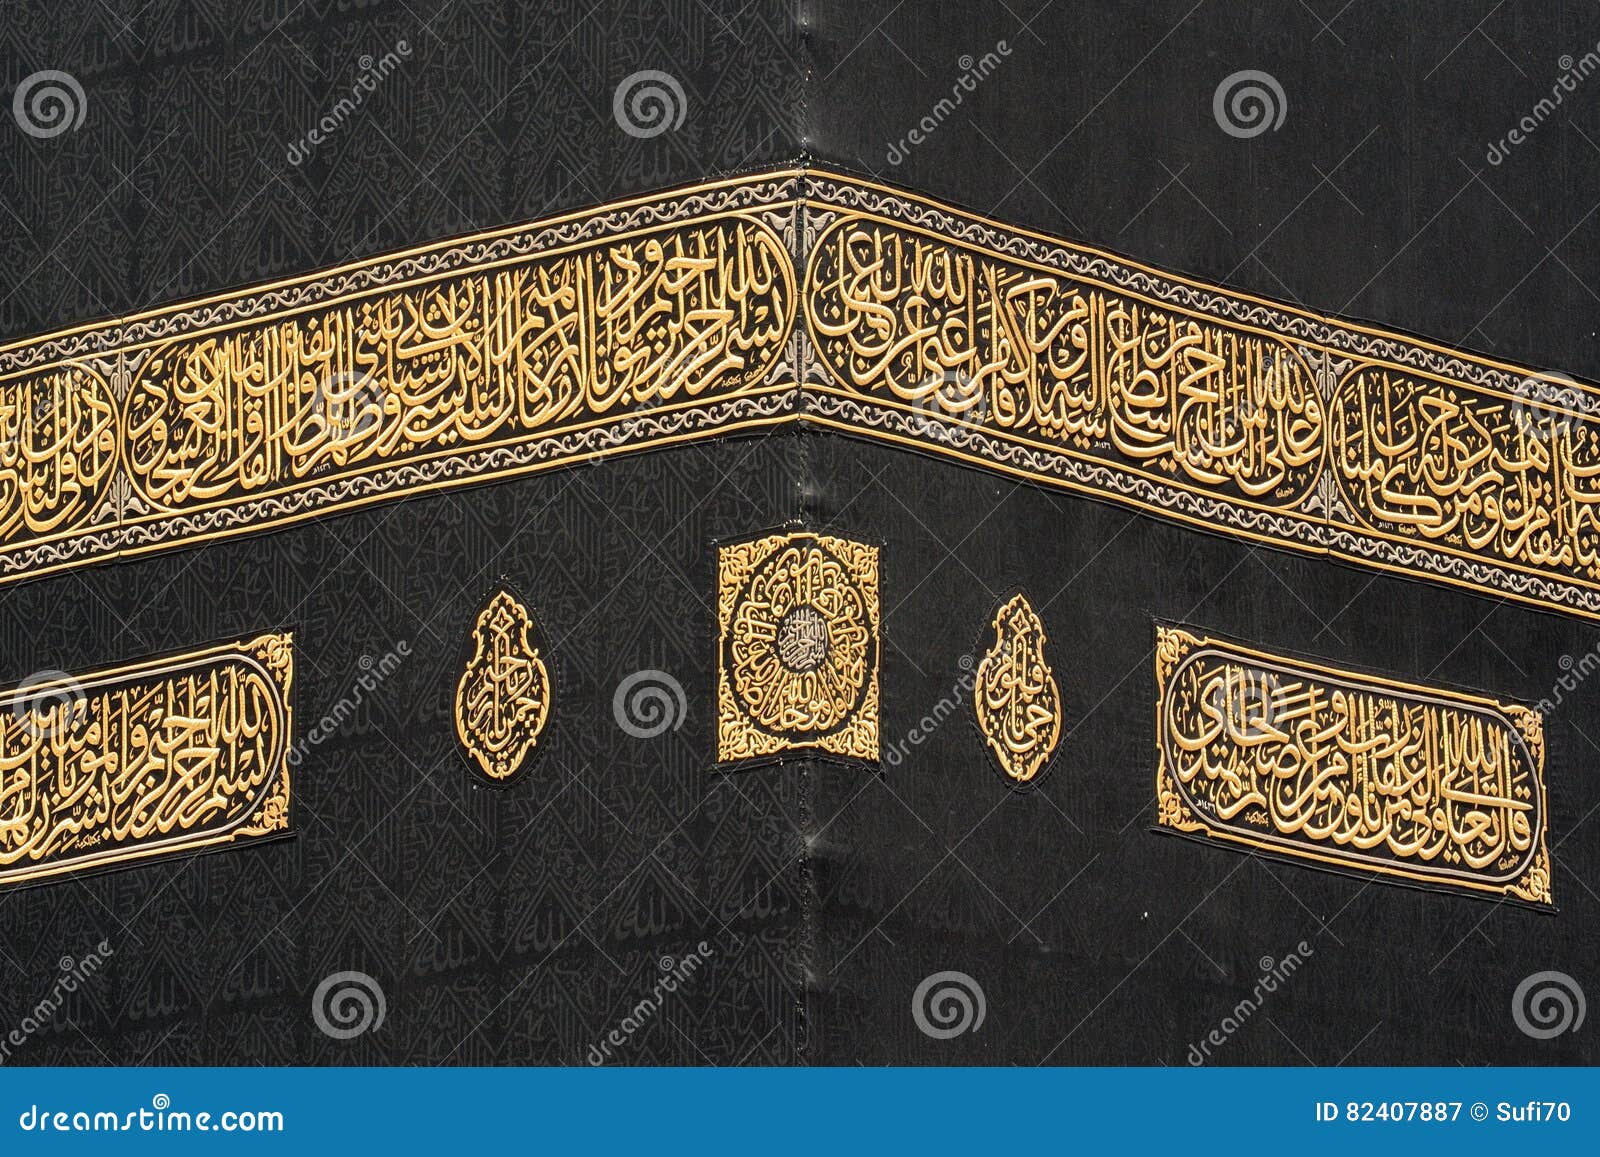 detail from kaaba in mecca in saudi arabia